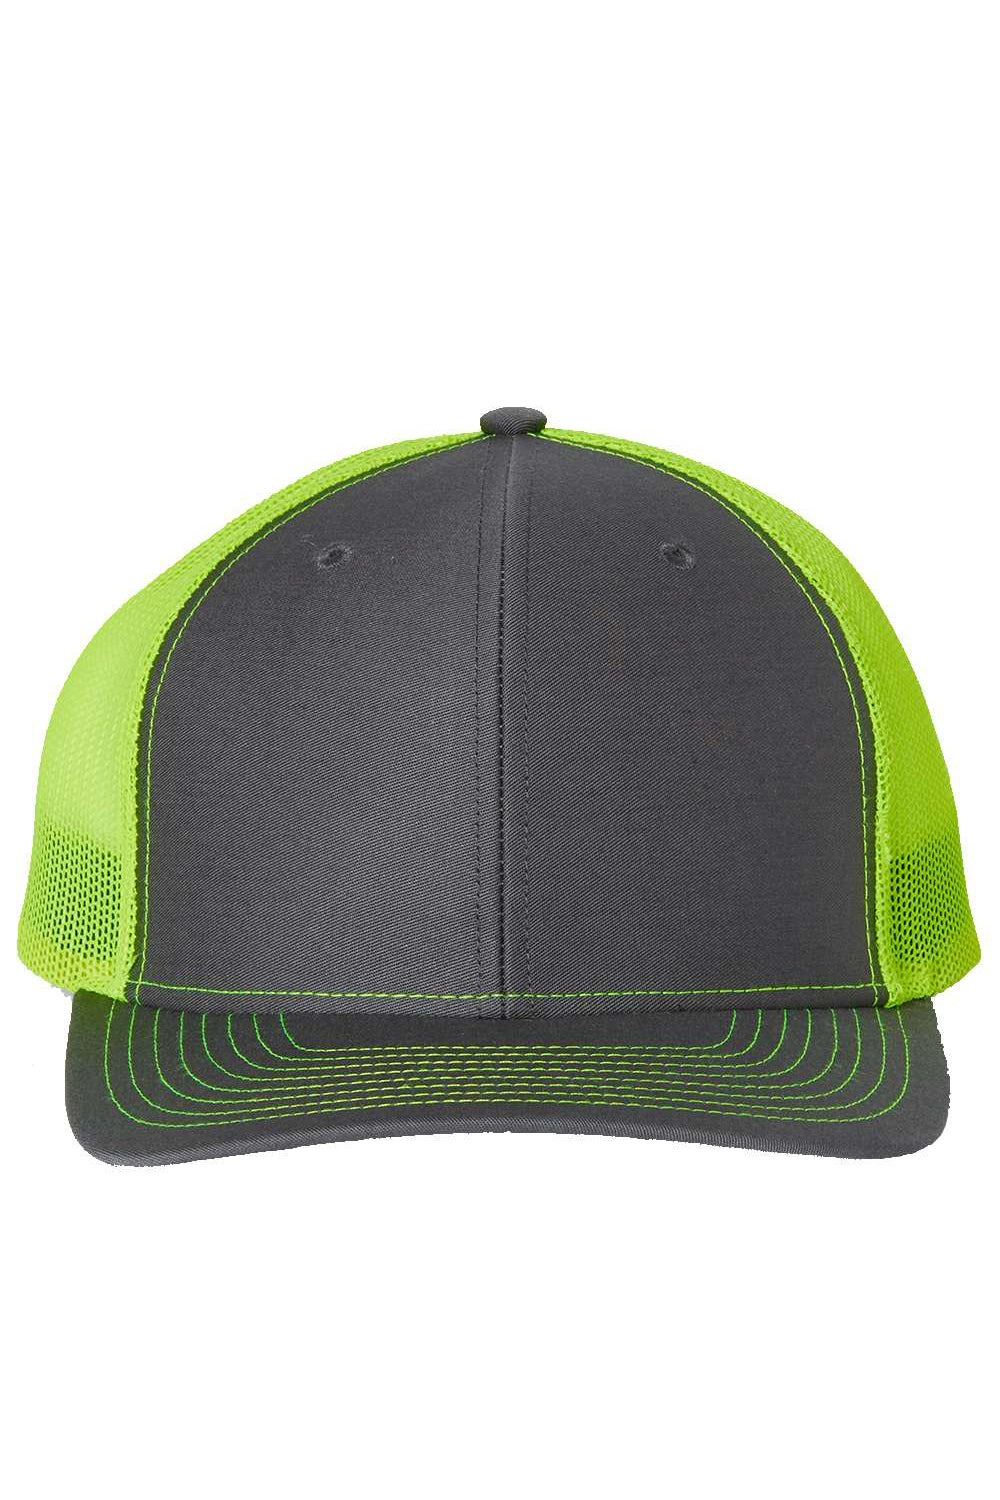 Richardson 112 Mens Snapback Trucker Hat Charcoal Grey/Neon Yellow Flat Front